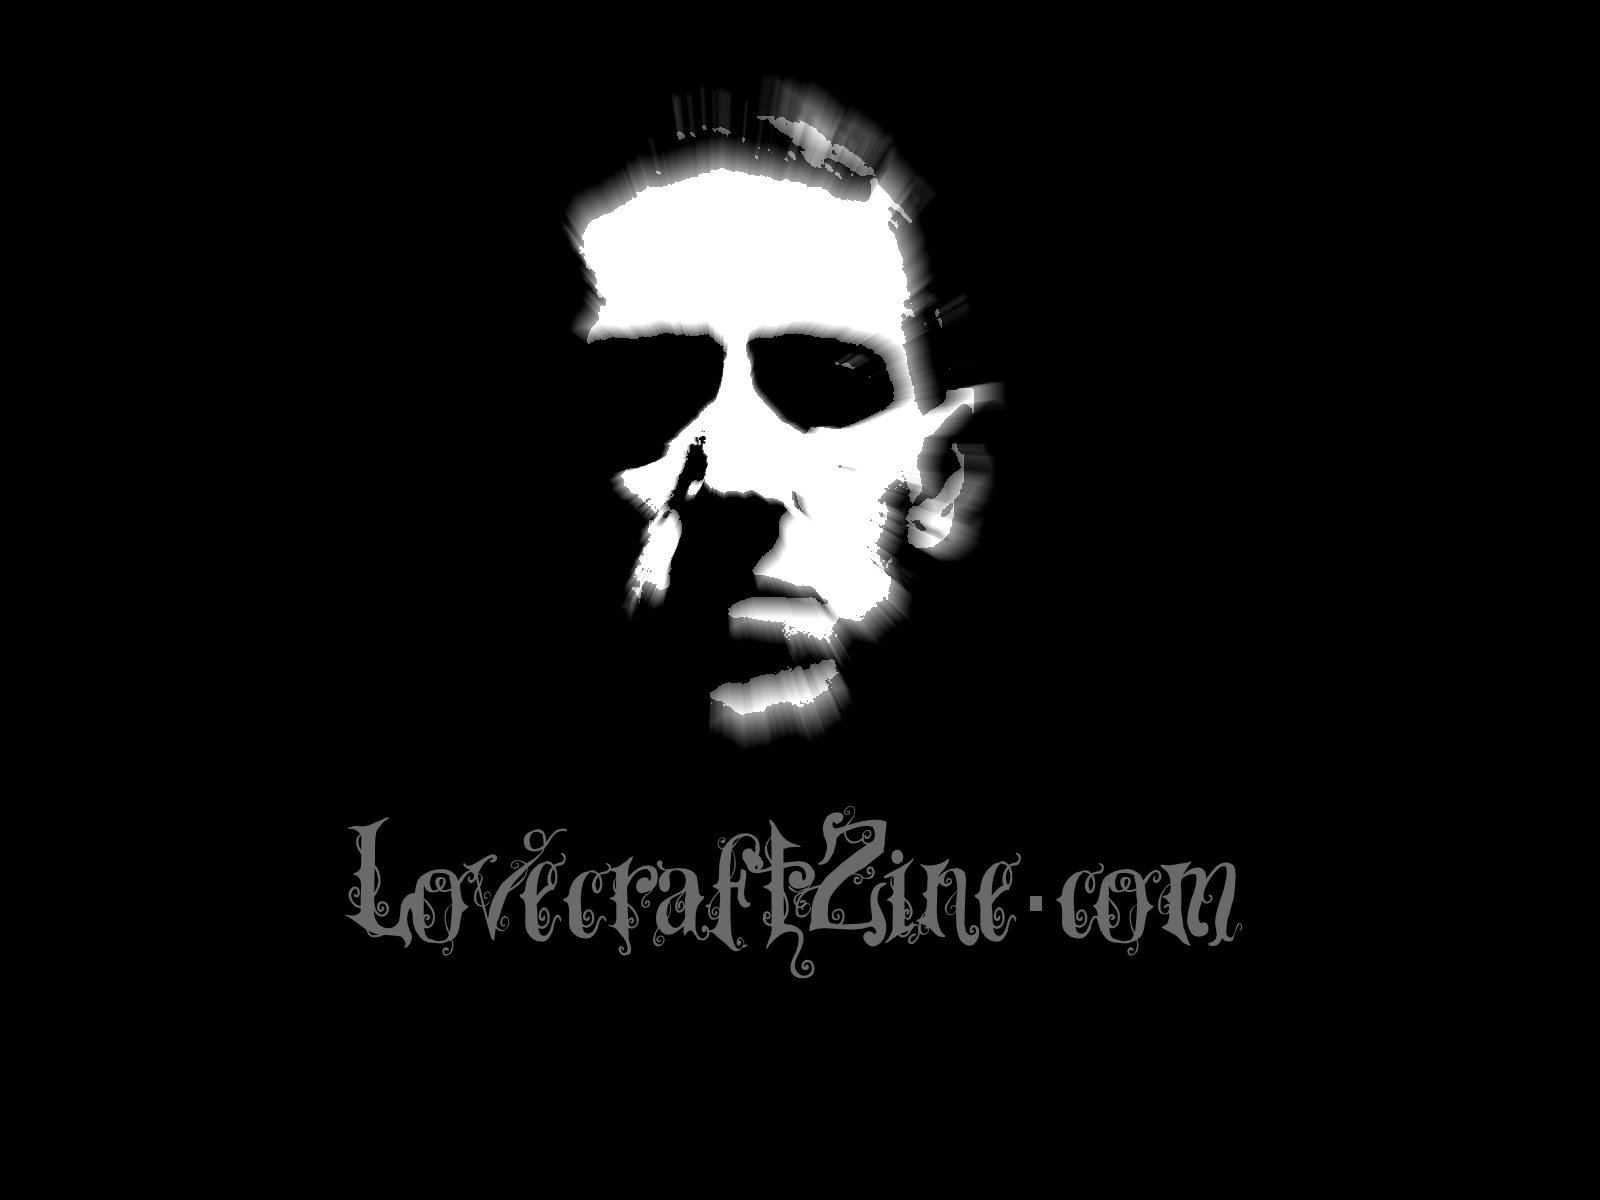 Lovecraft Ezine Wallpaper Click To Enlarge